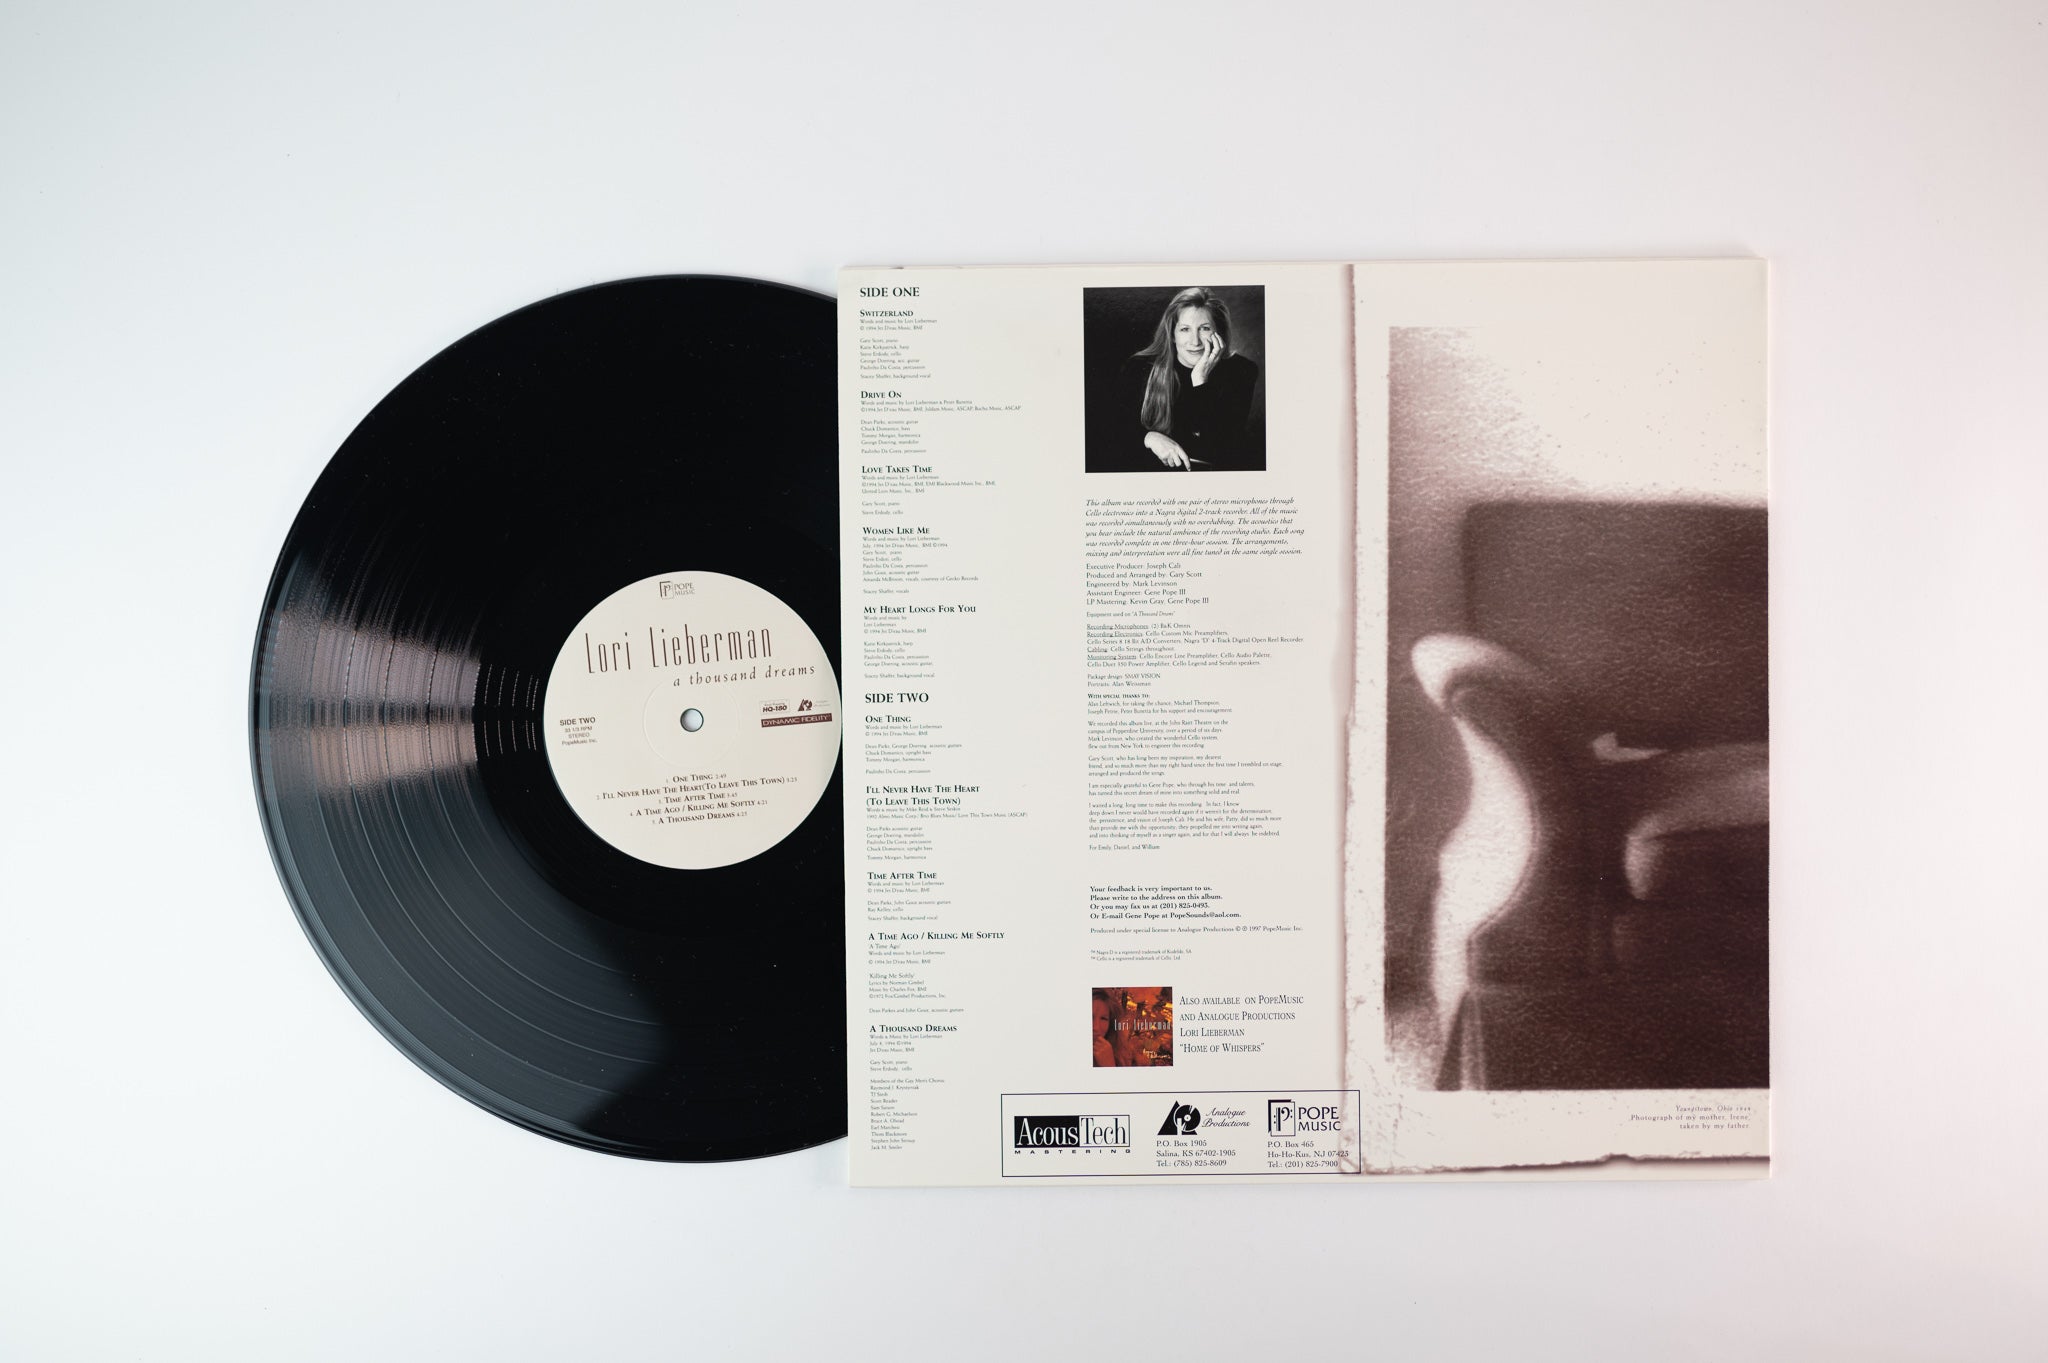 Lori Lieberman - A Thousand Dreams on Pope Analogue Production 180 Gram Vinyl